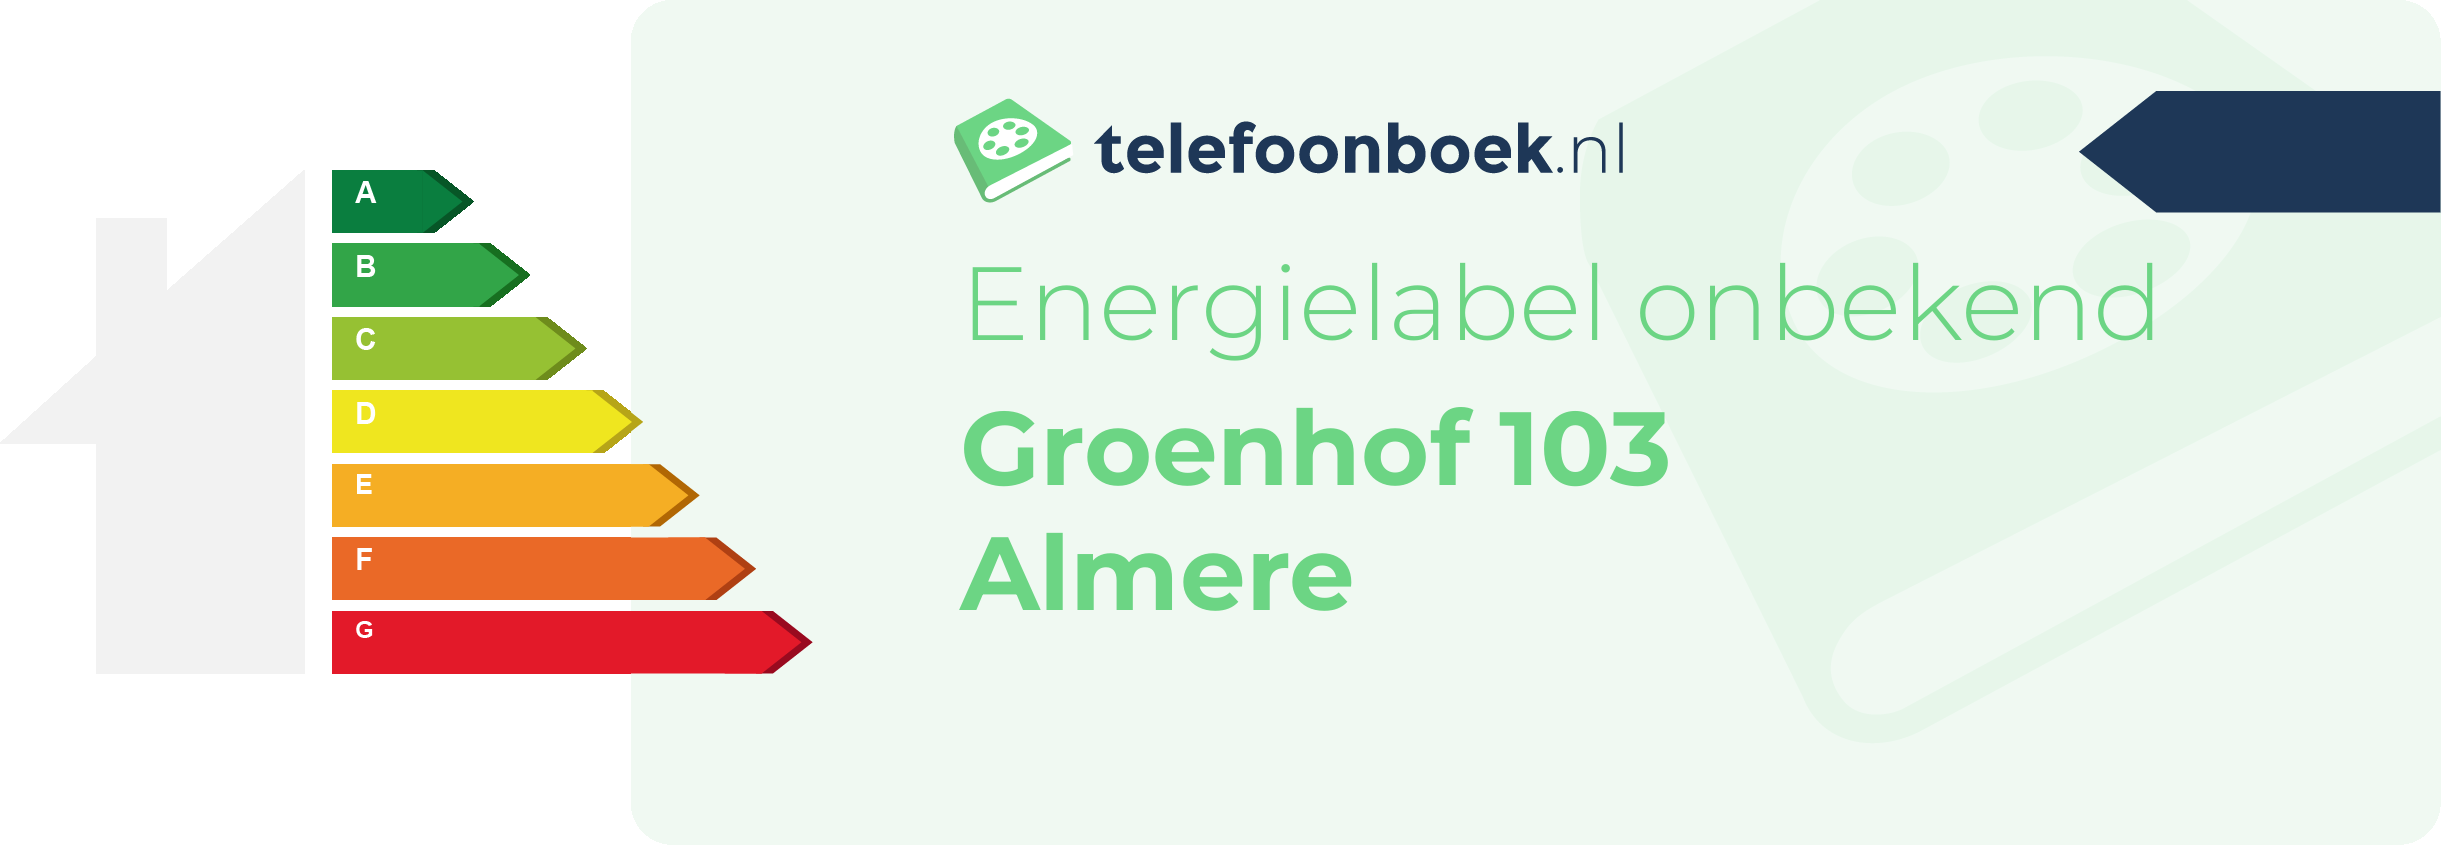 Energielabel Groenhof 103 Almere